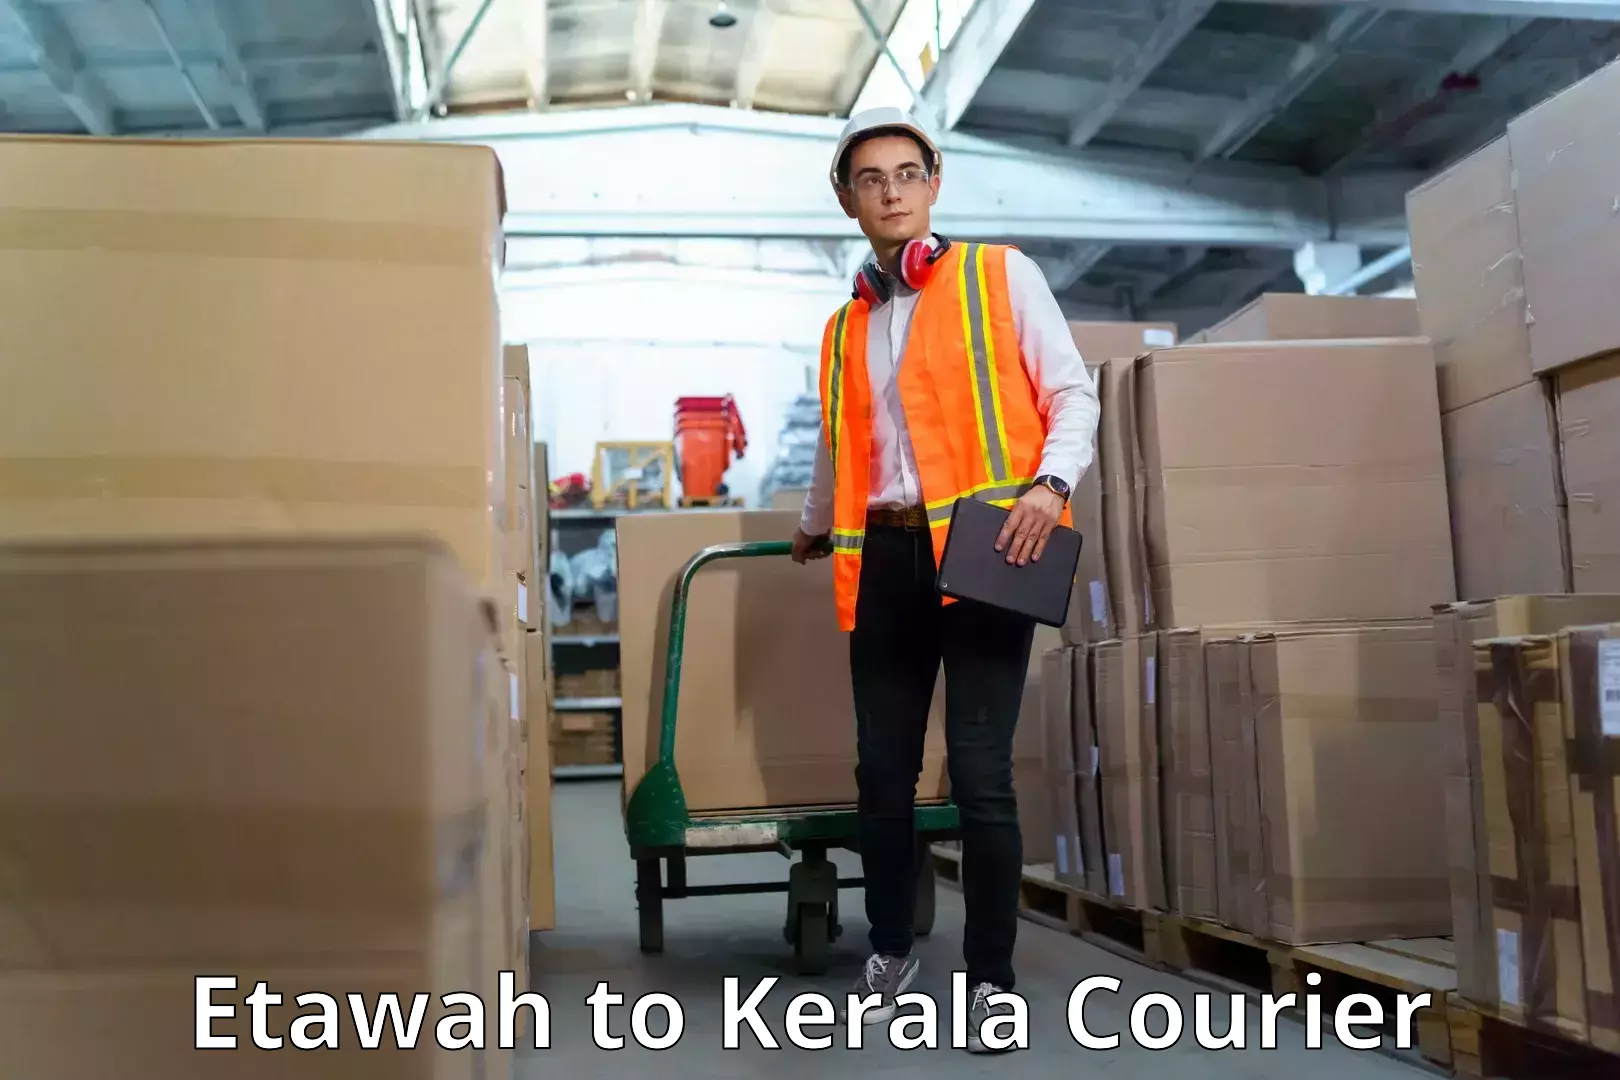 Global logistics network Etawah to Kerala